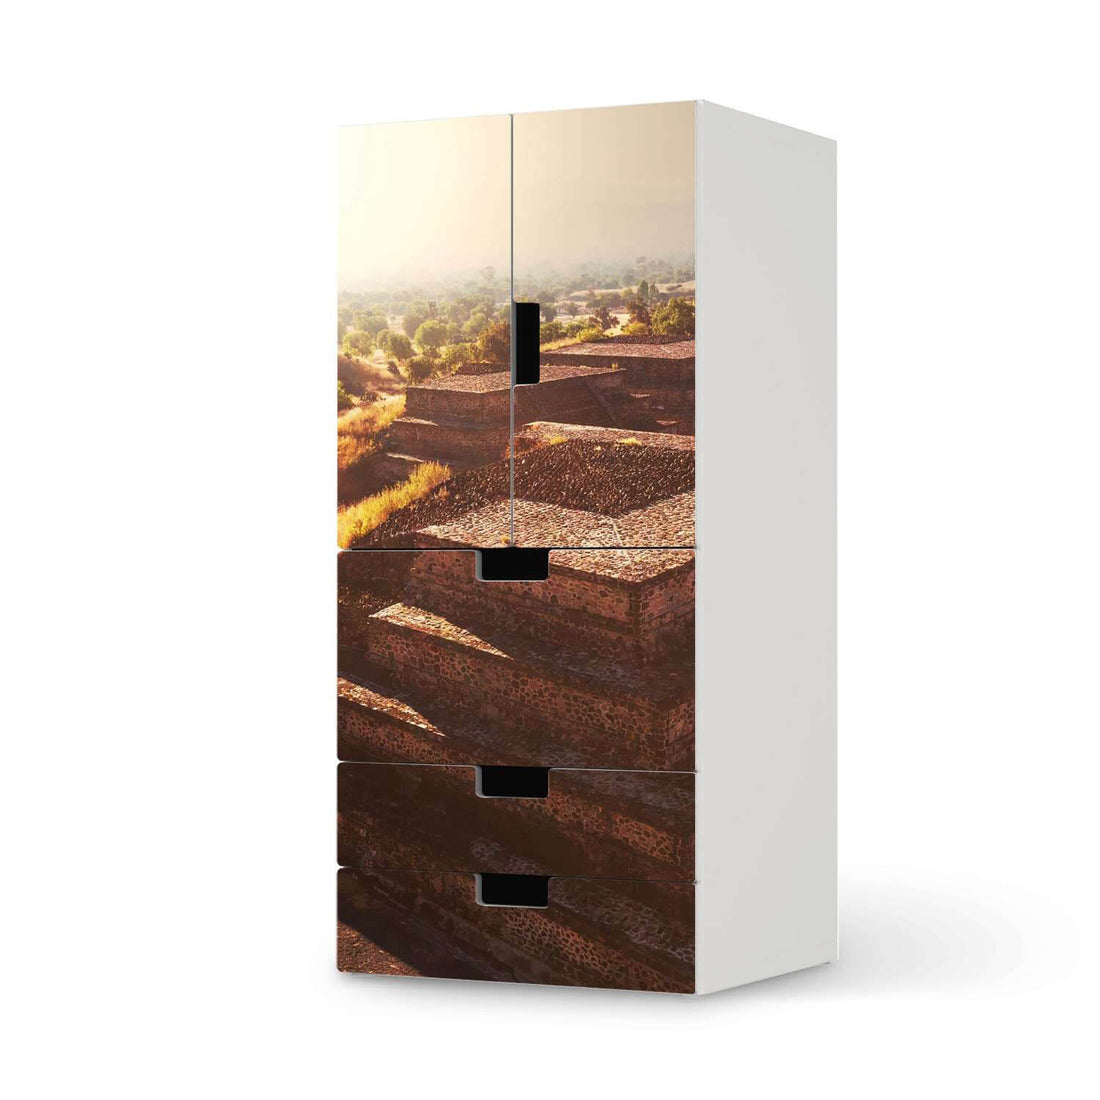 Möbelfolie Teotihuacan - IKEA Stuva kombiniert - 3 Schubladen und 2 kleine Türen  - weiss